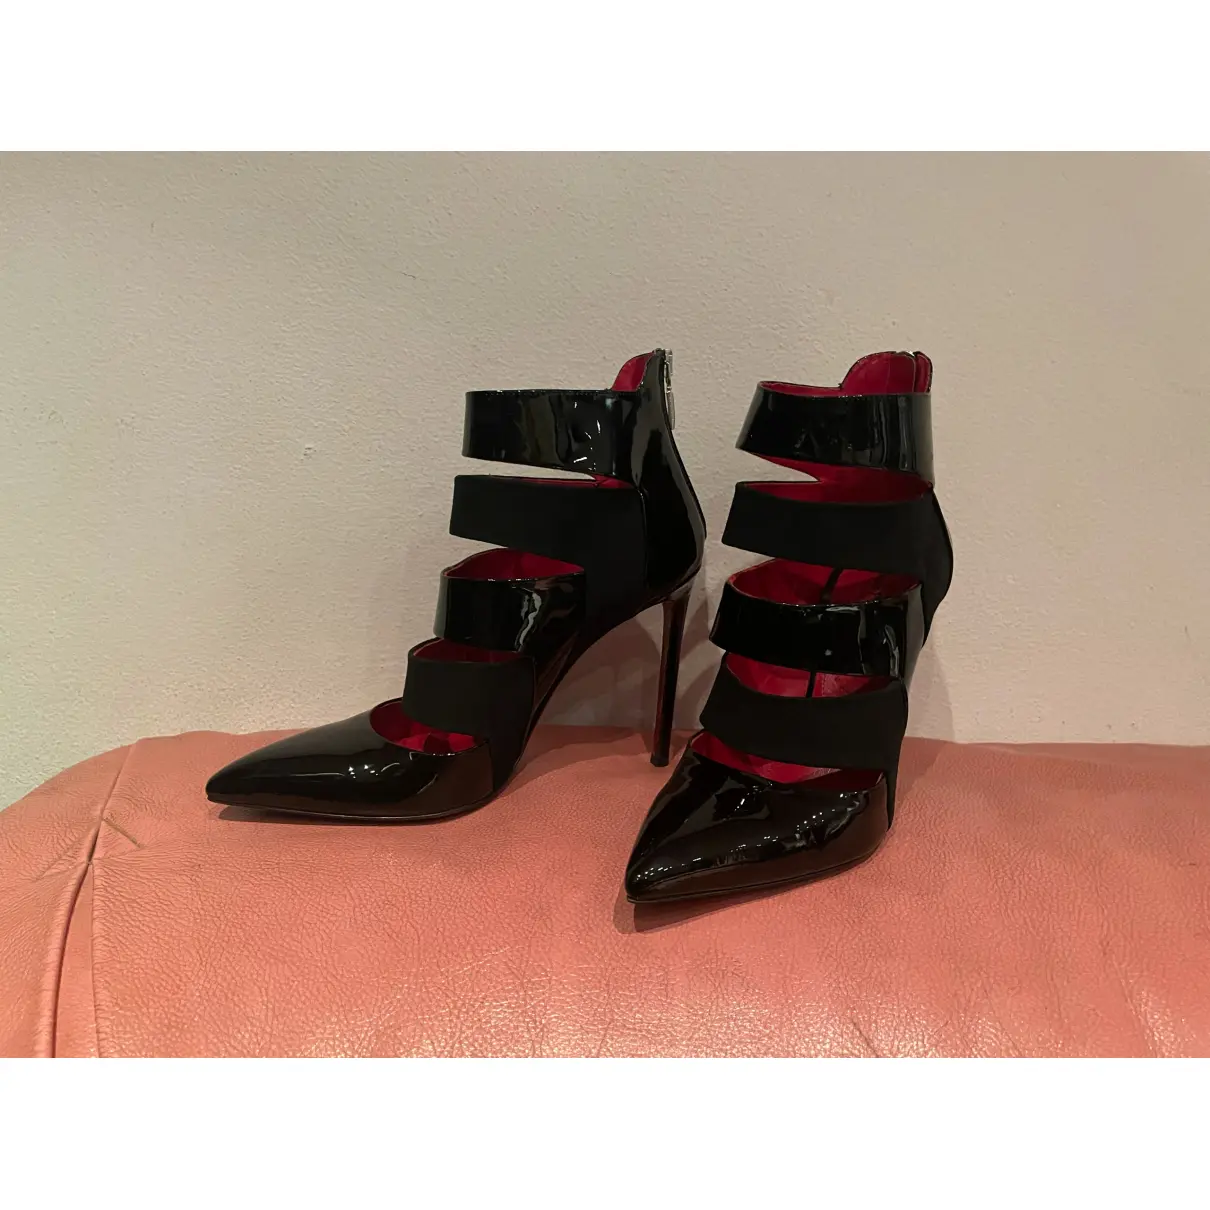 Buy Cesare Paciotti Patent leather heels online